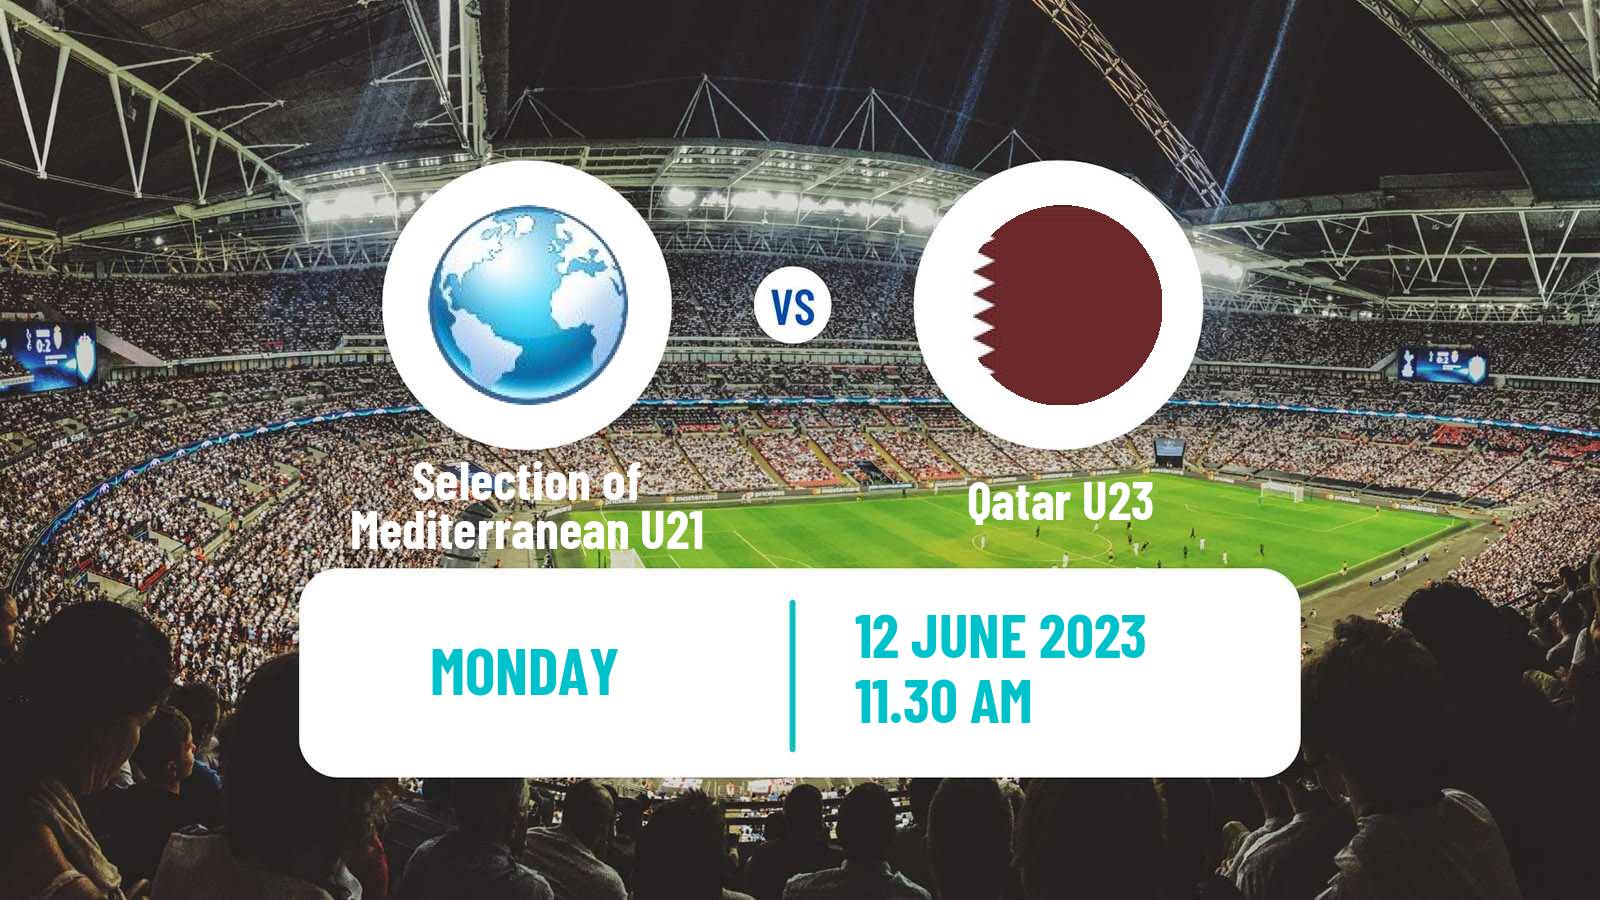 Soccer Maurice Revello Tournament Selection of Mediterranean U21 - Qatar U23